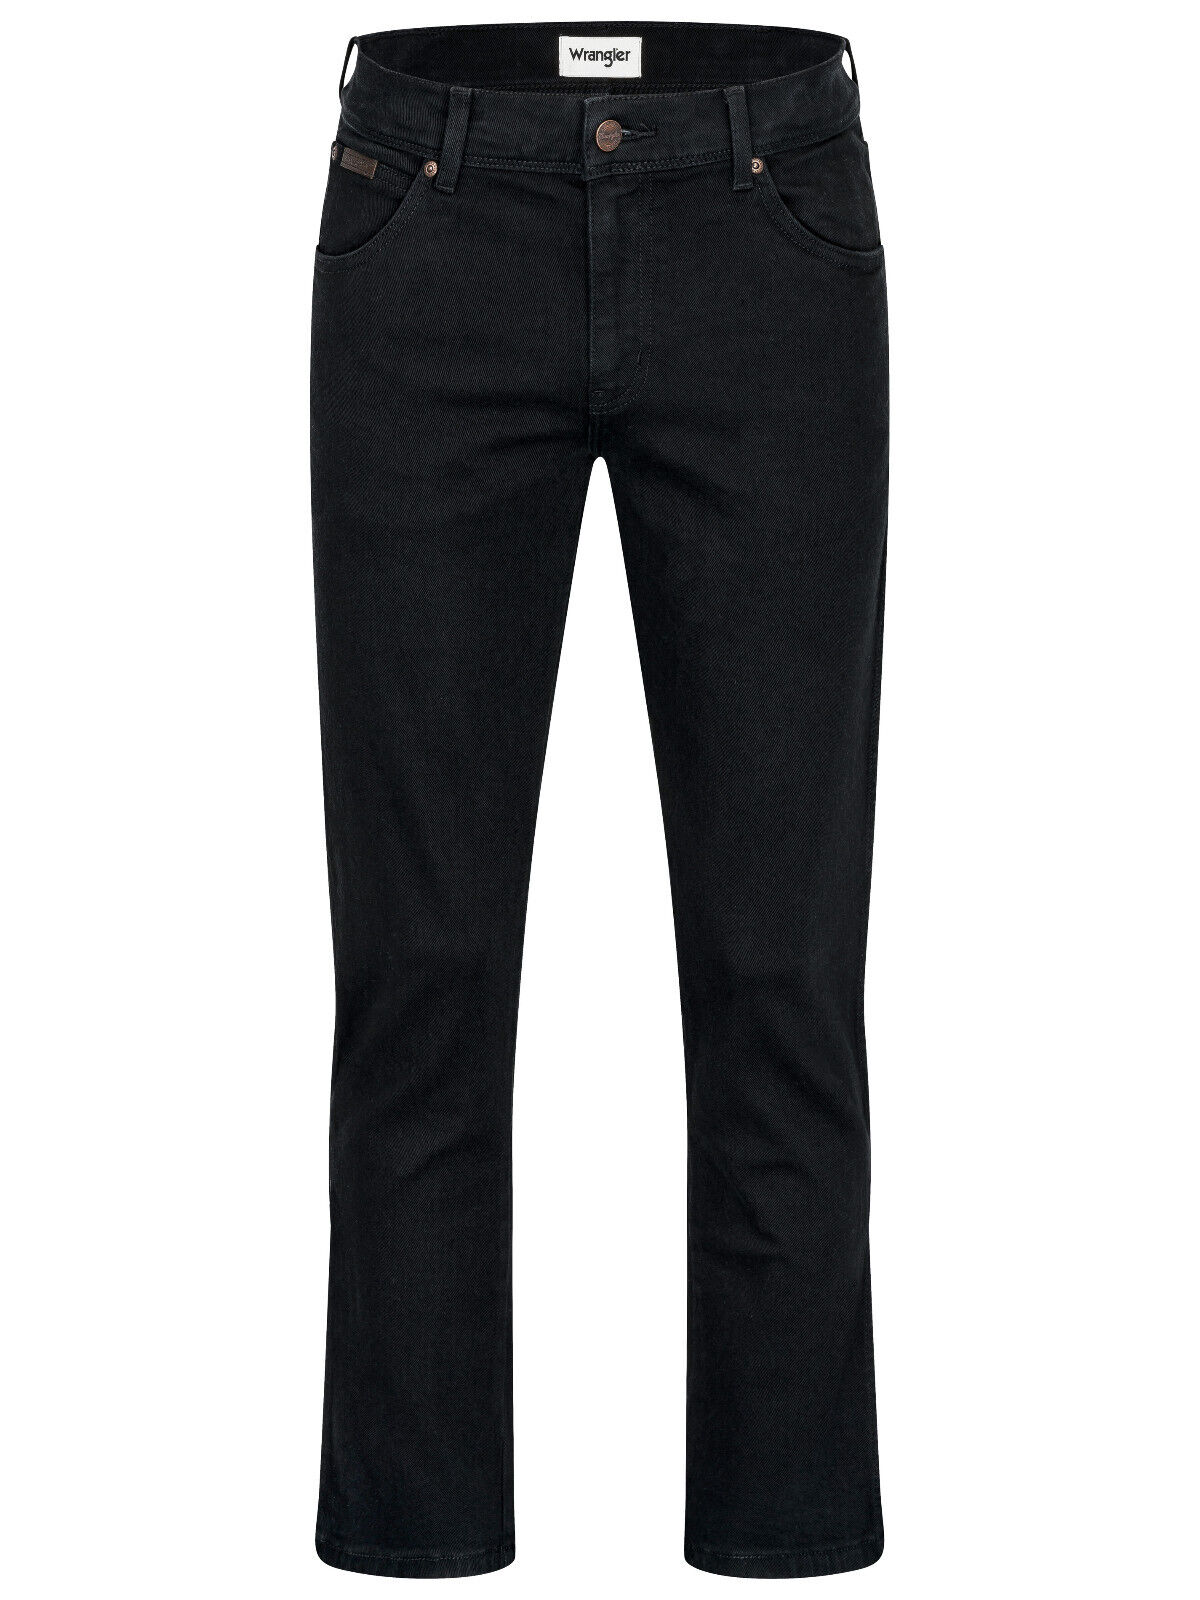 Wrangler Texas Stretch Herren Jeans BLACK OVERDYE W12109004 Schwarz